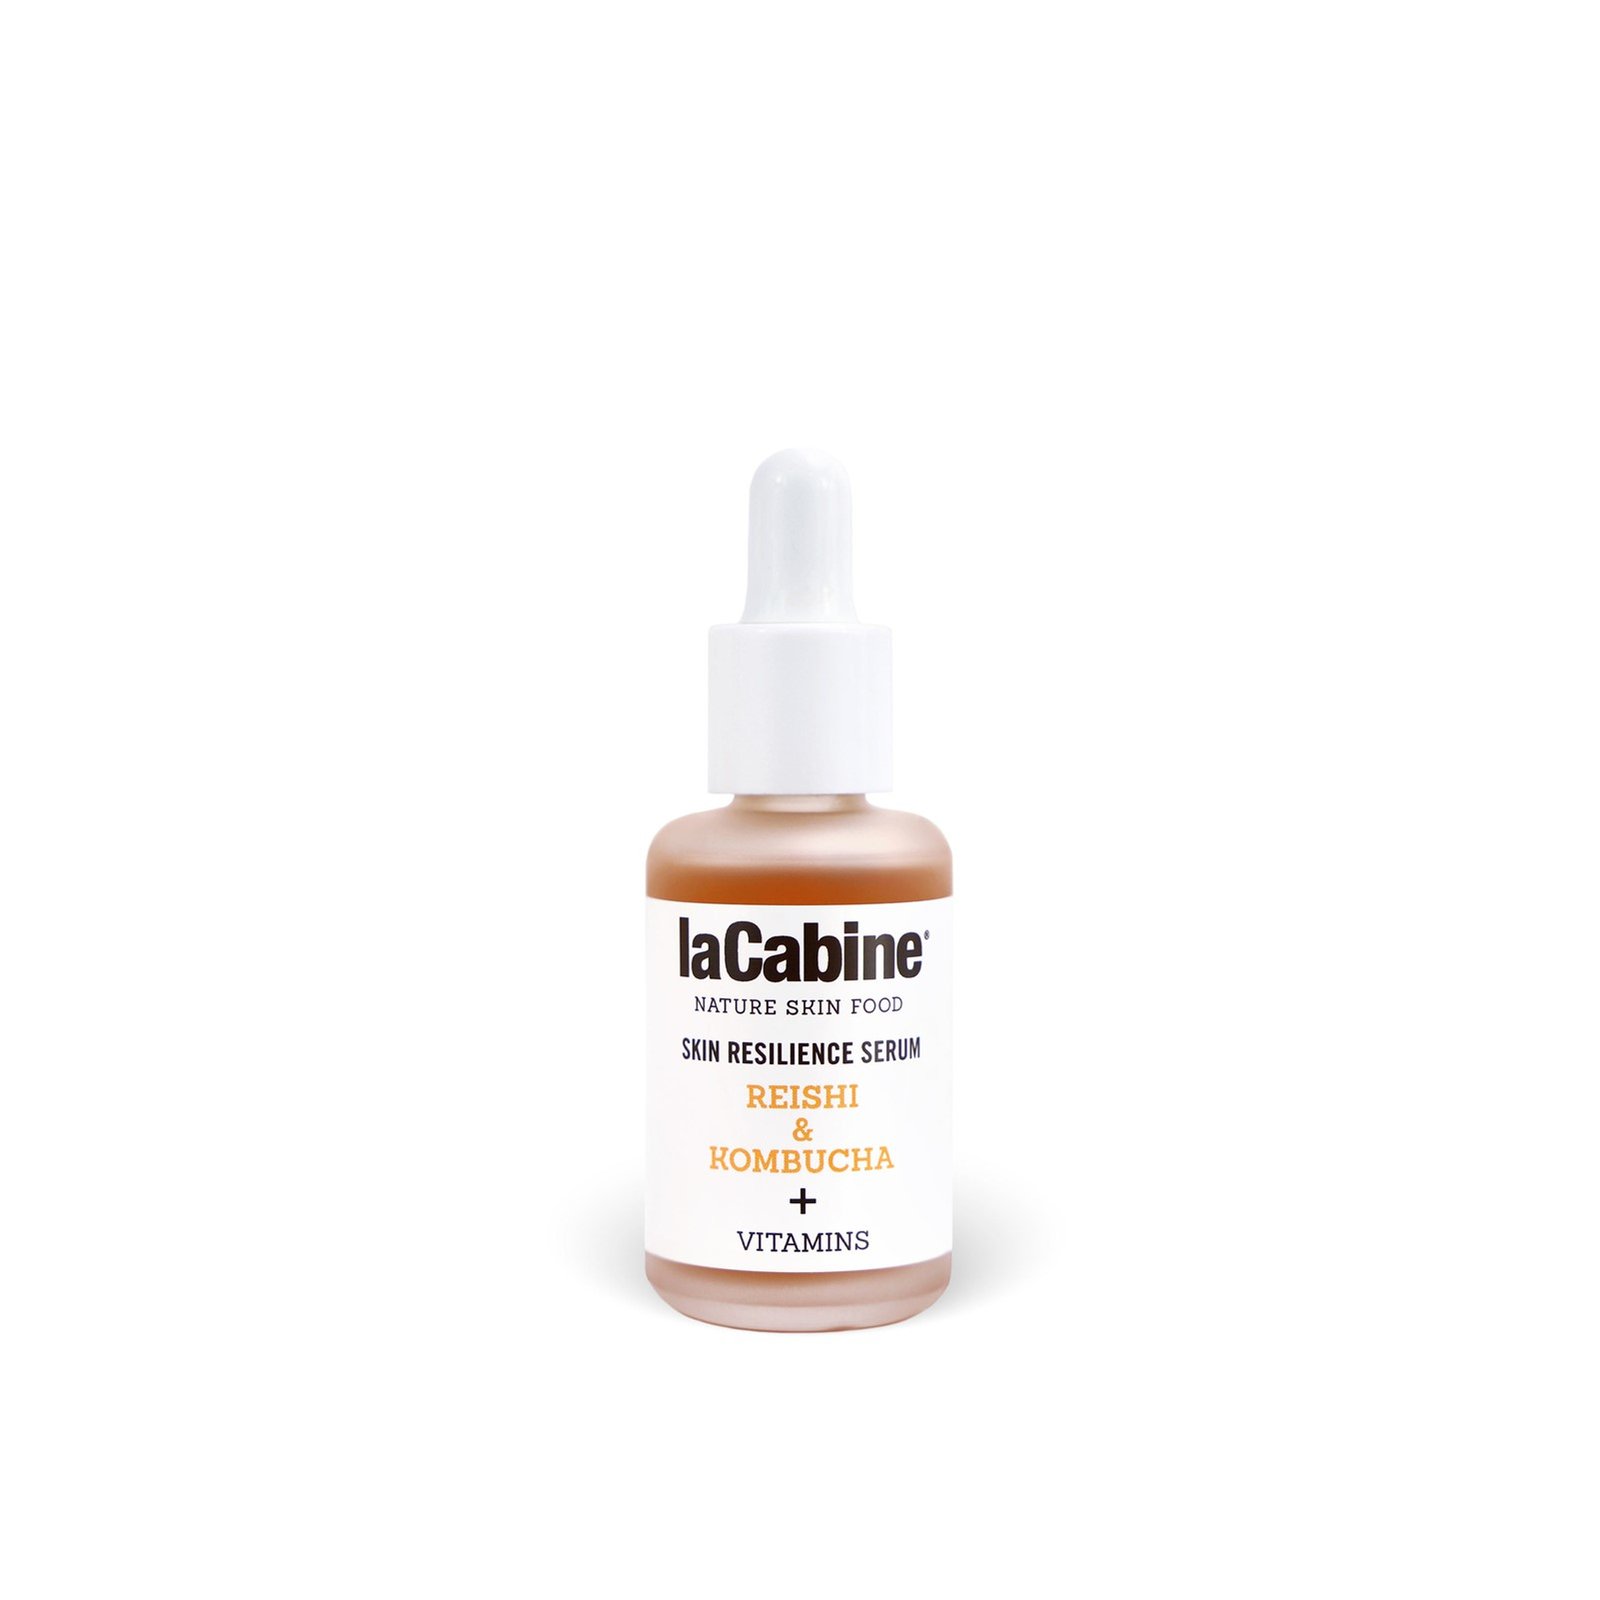 La Cabine Nature Skin Food Skin Resilience Serum 30ml (1 fl oz)